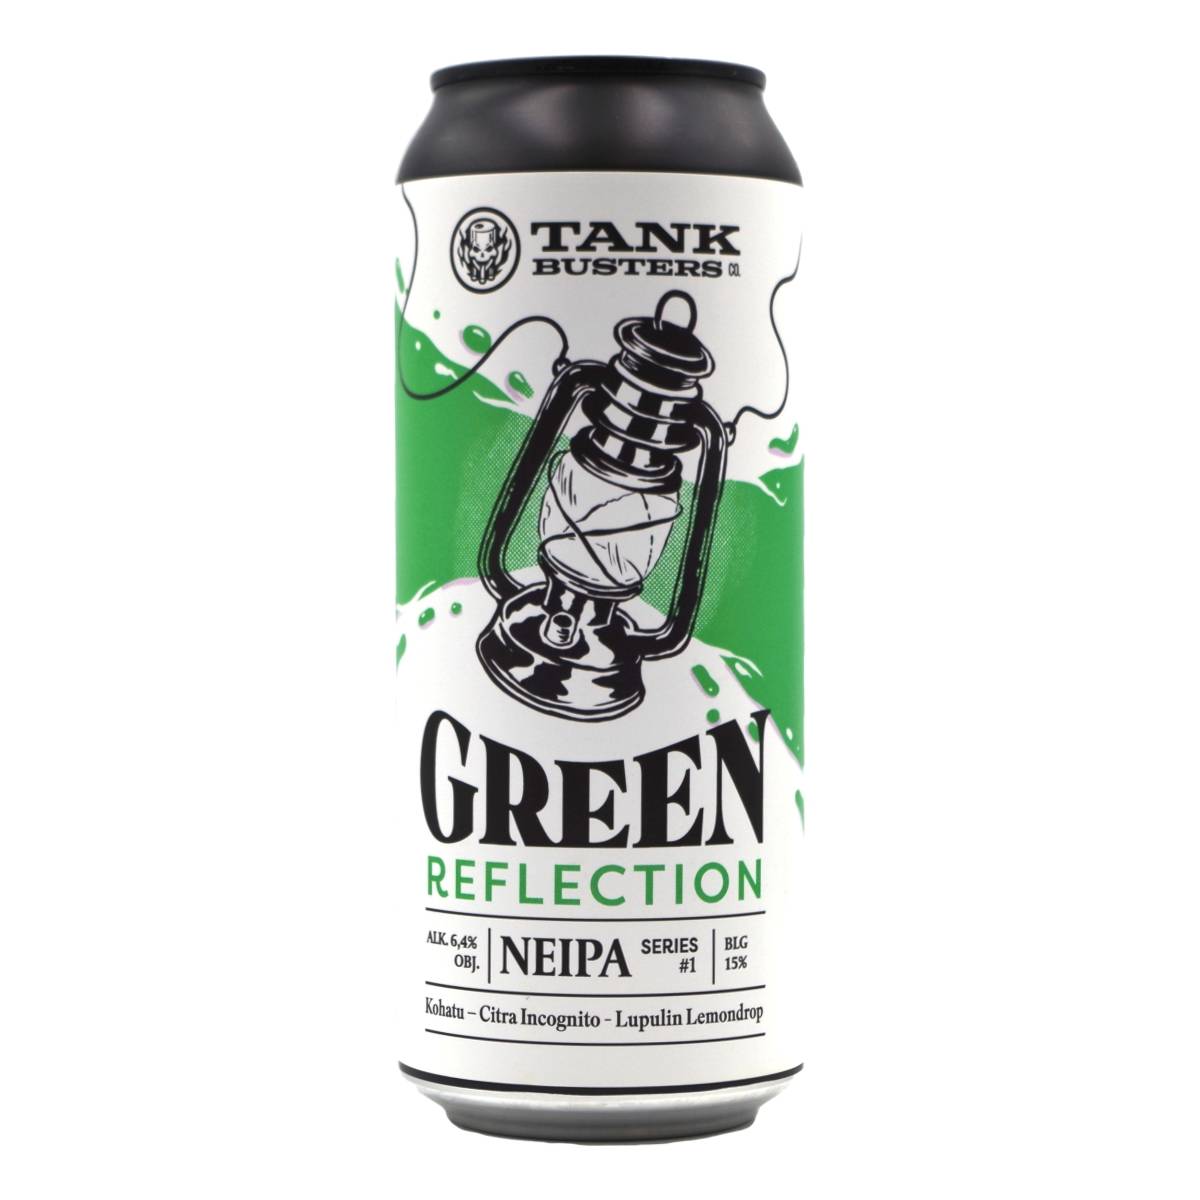 Tankbusters Green Reflection – New England IPA